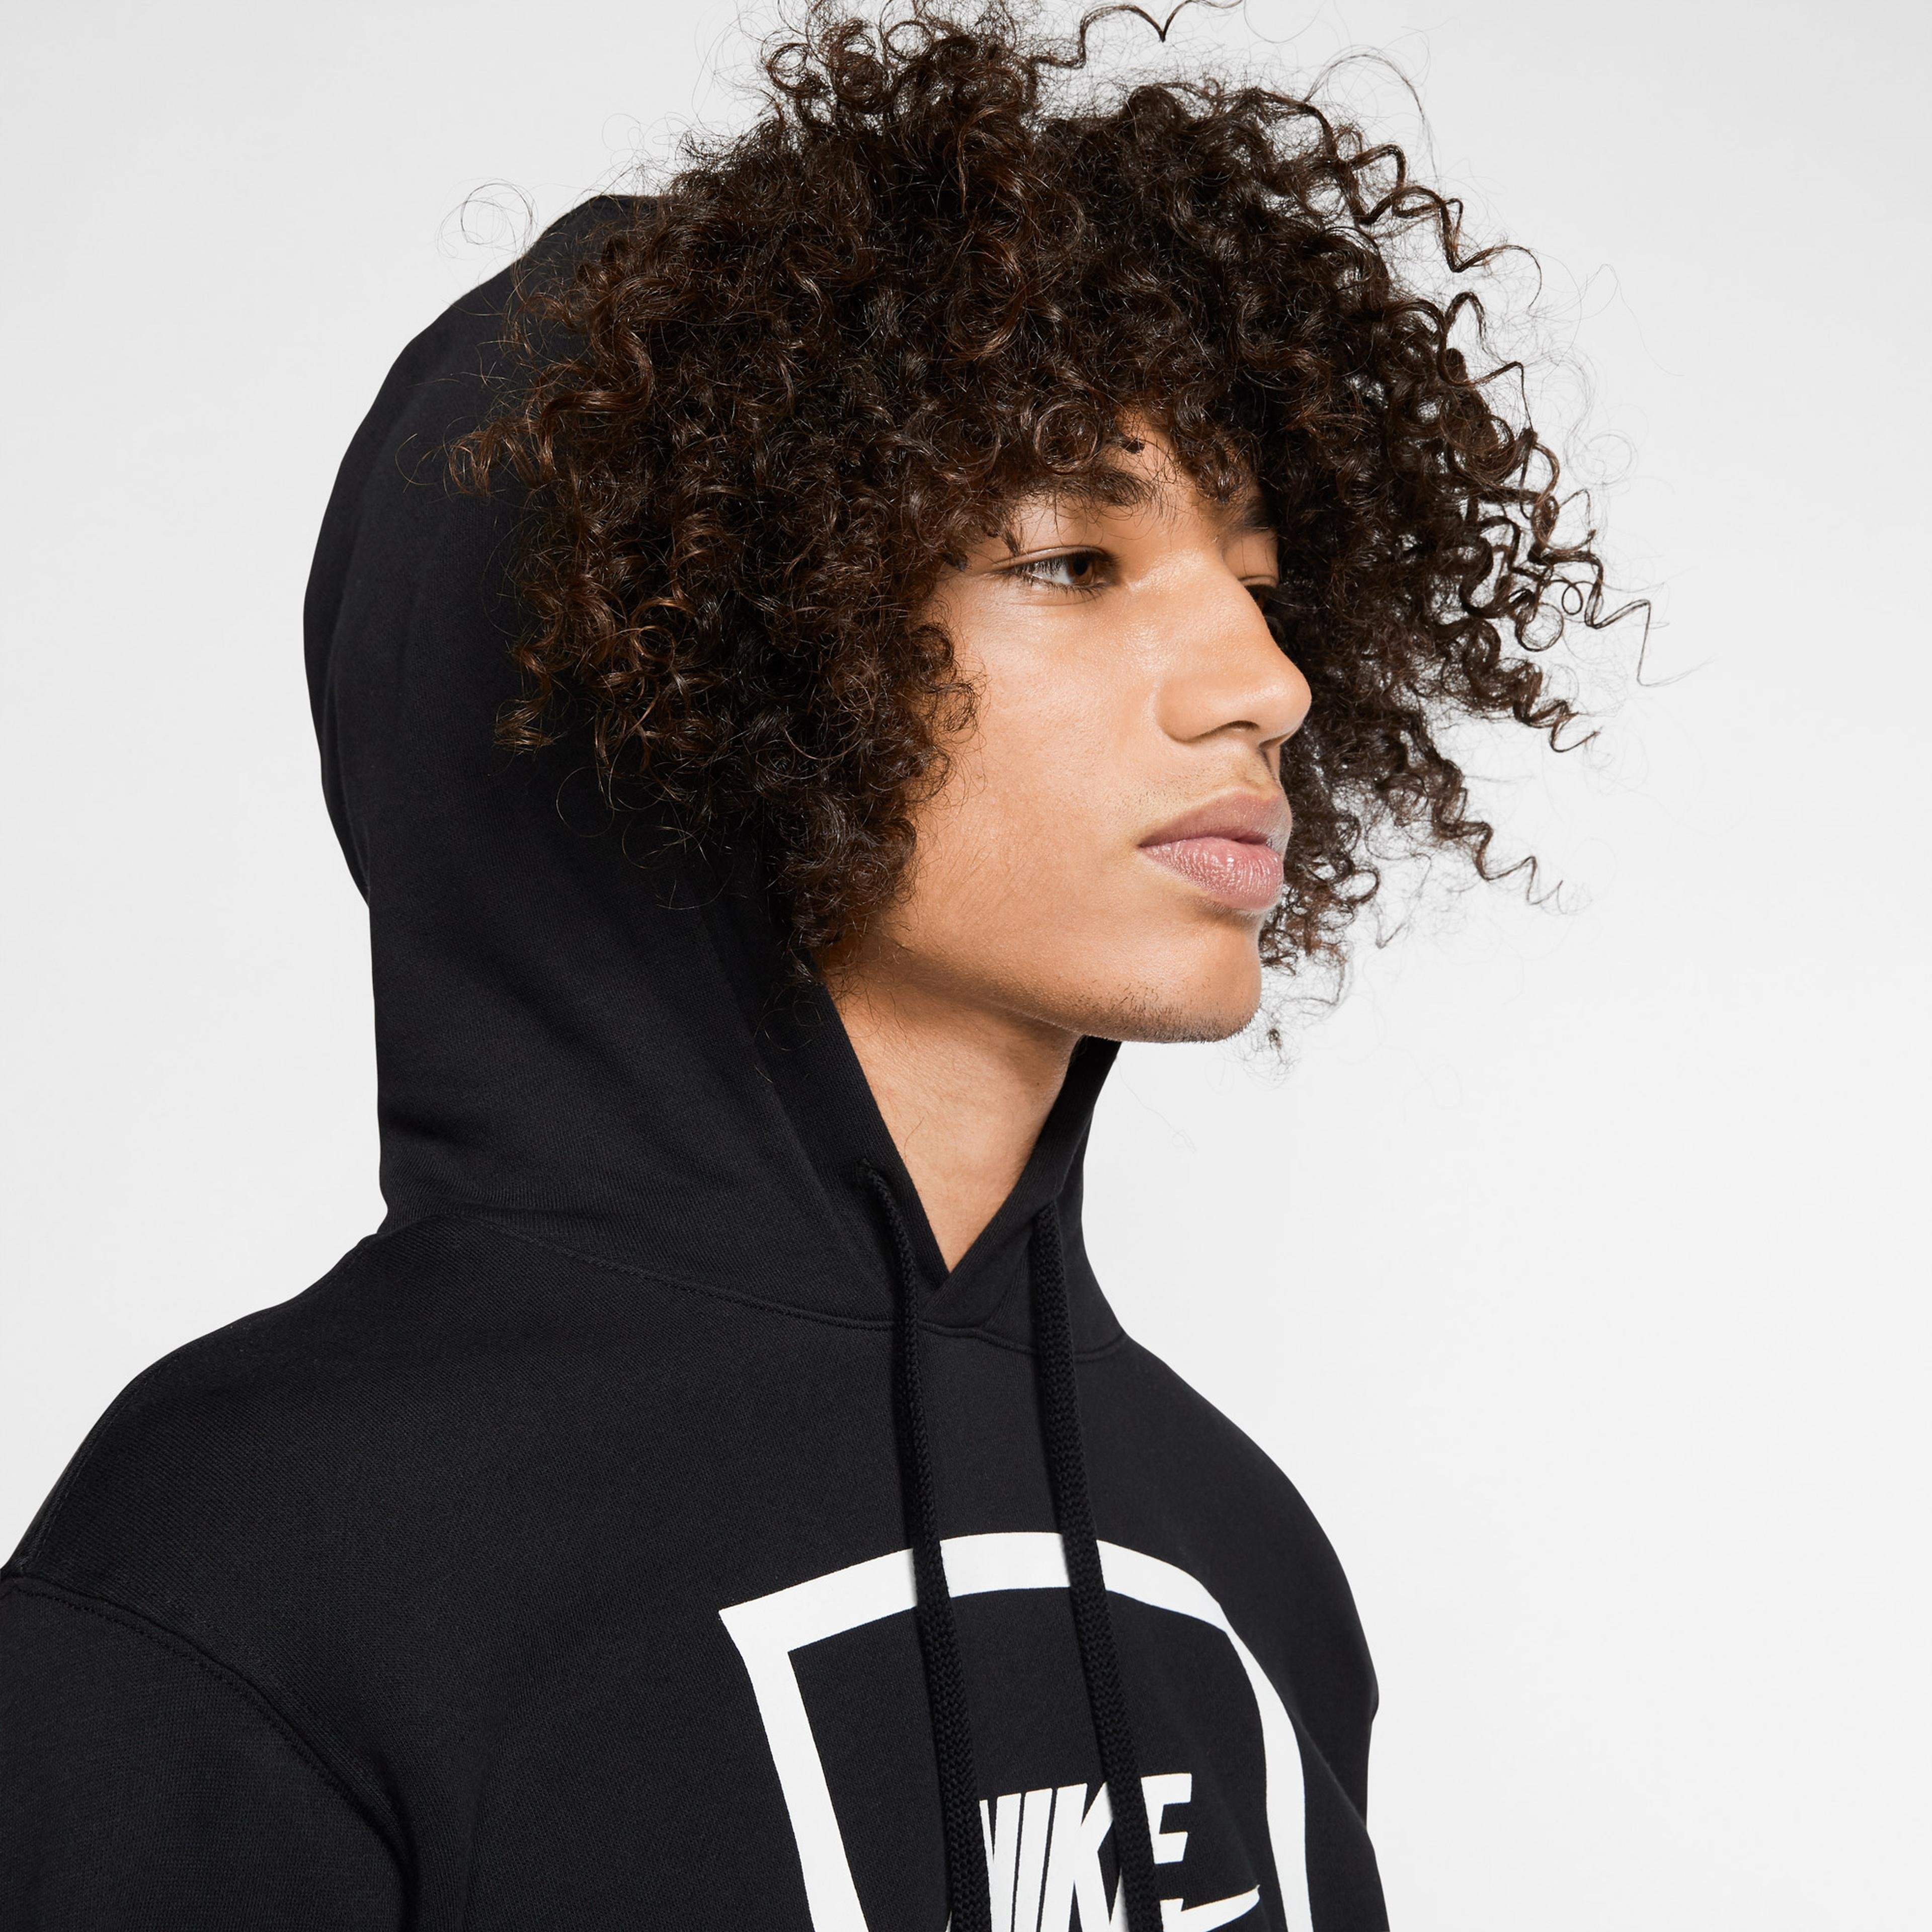 Nike Sportswear Essential Air 5 Erkek Siyah Kapüşonlu Sweatshirt